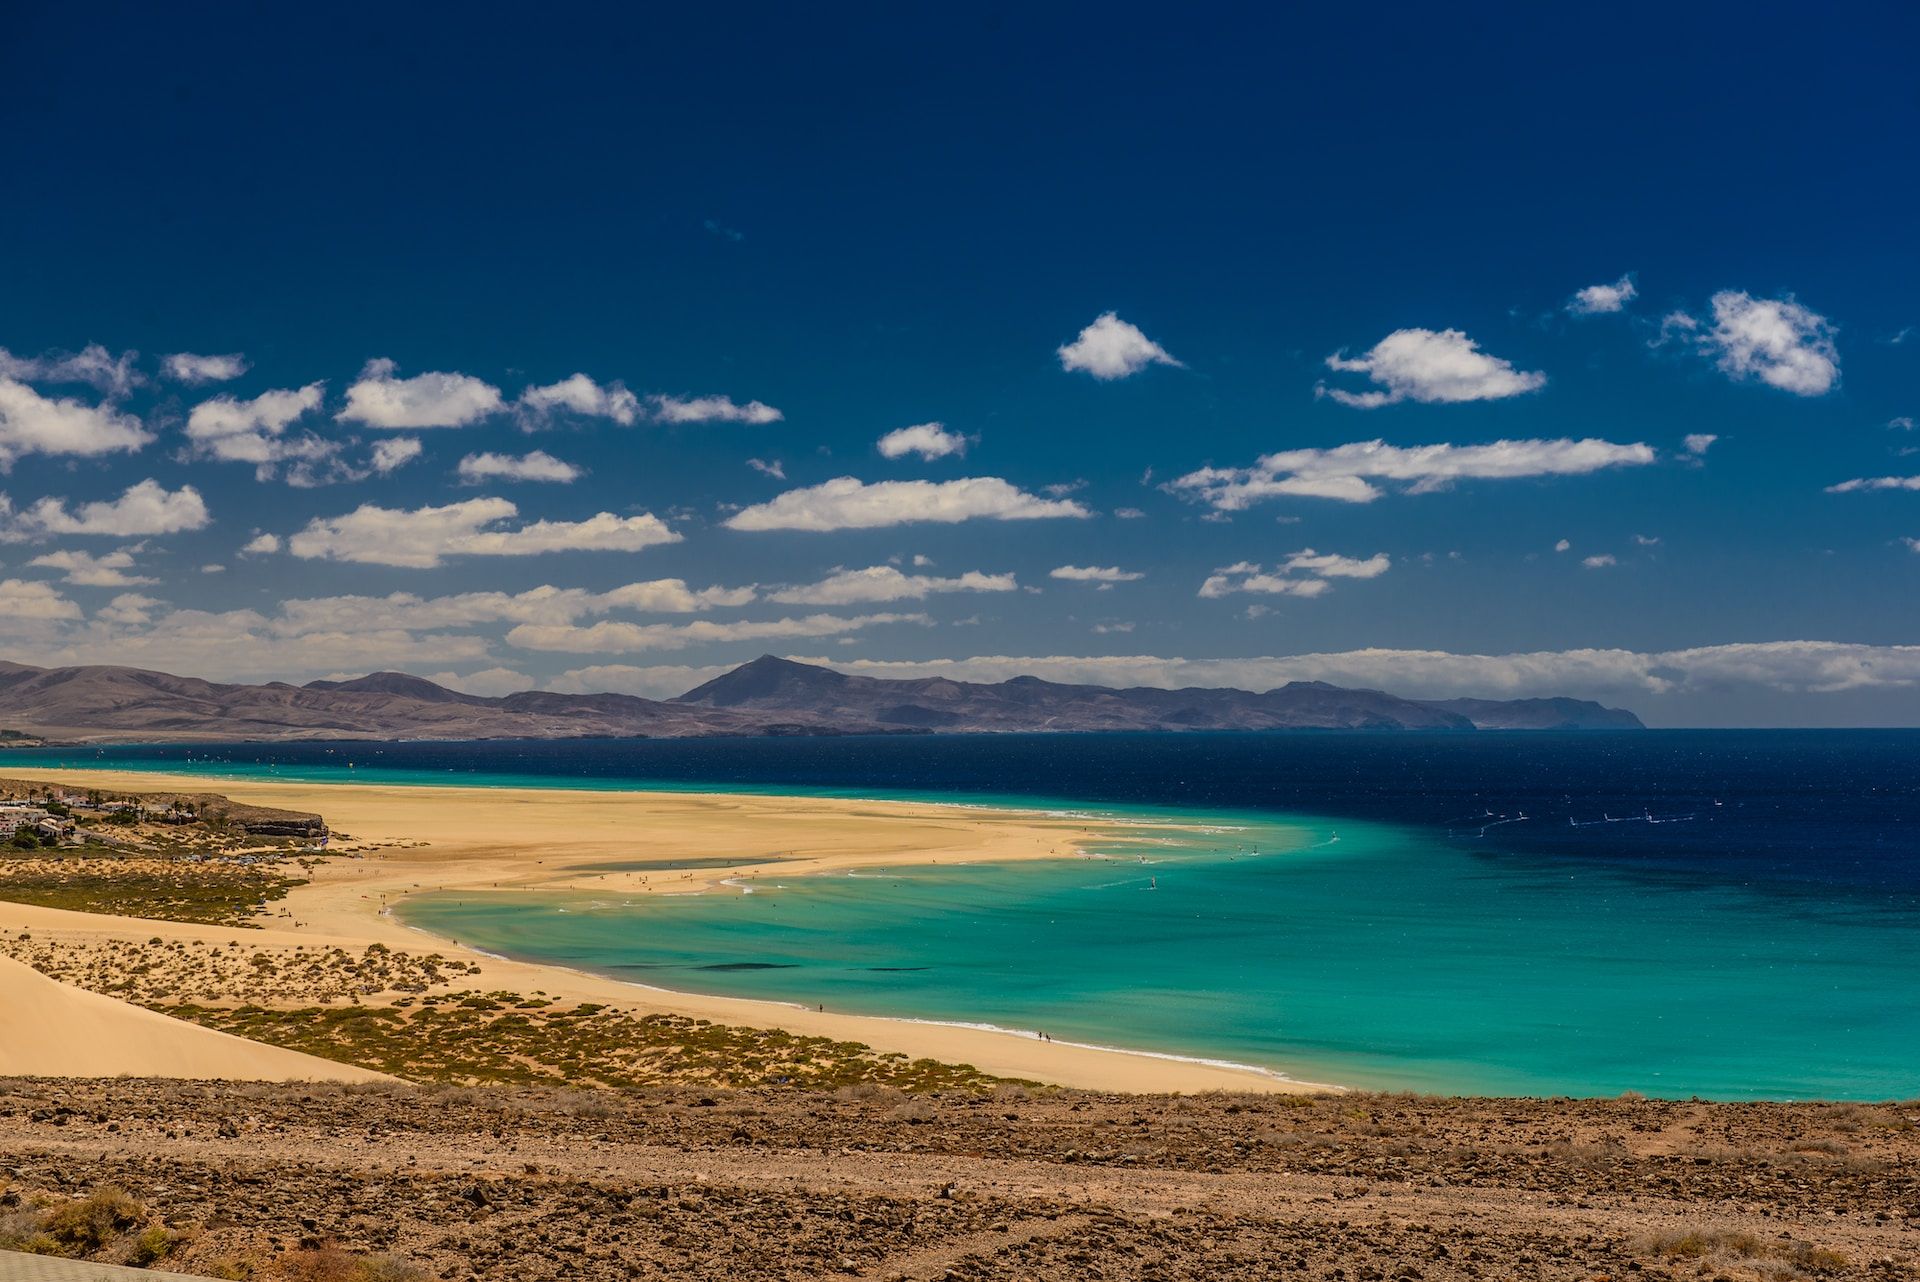 The sea in Fuerteventura, Canary Islands